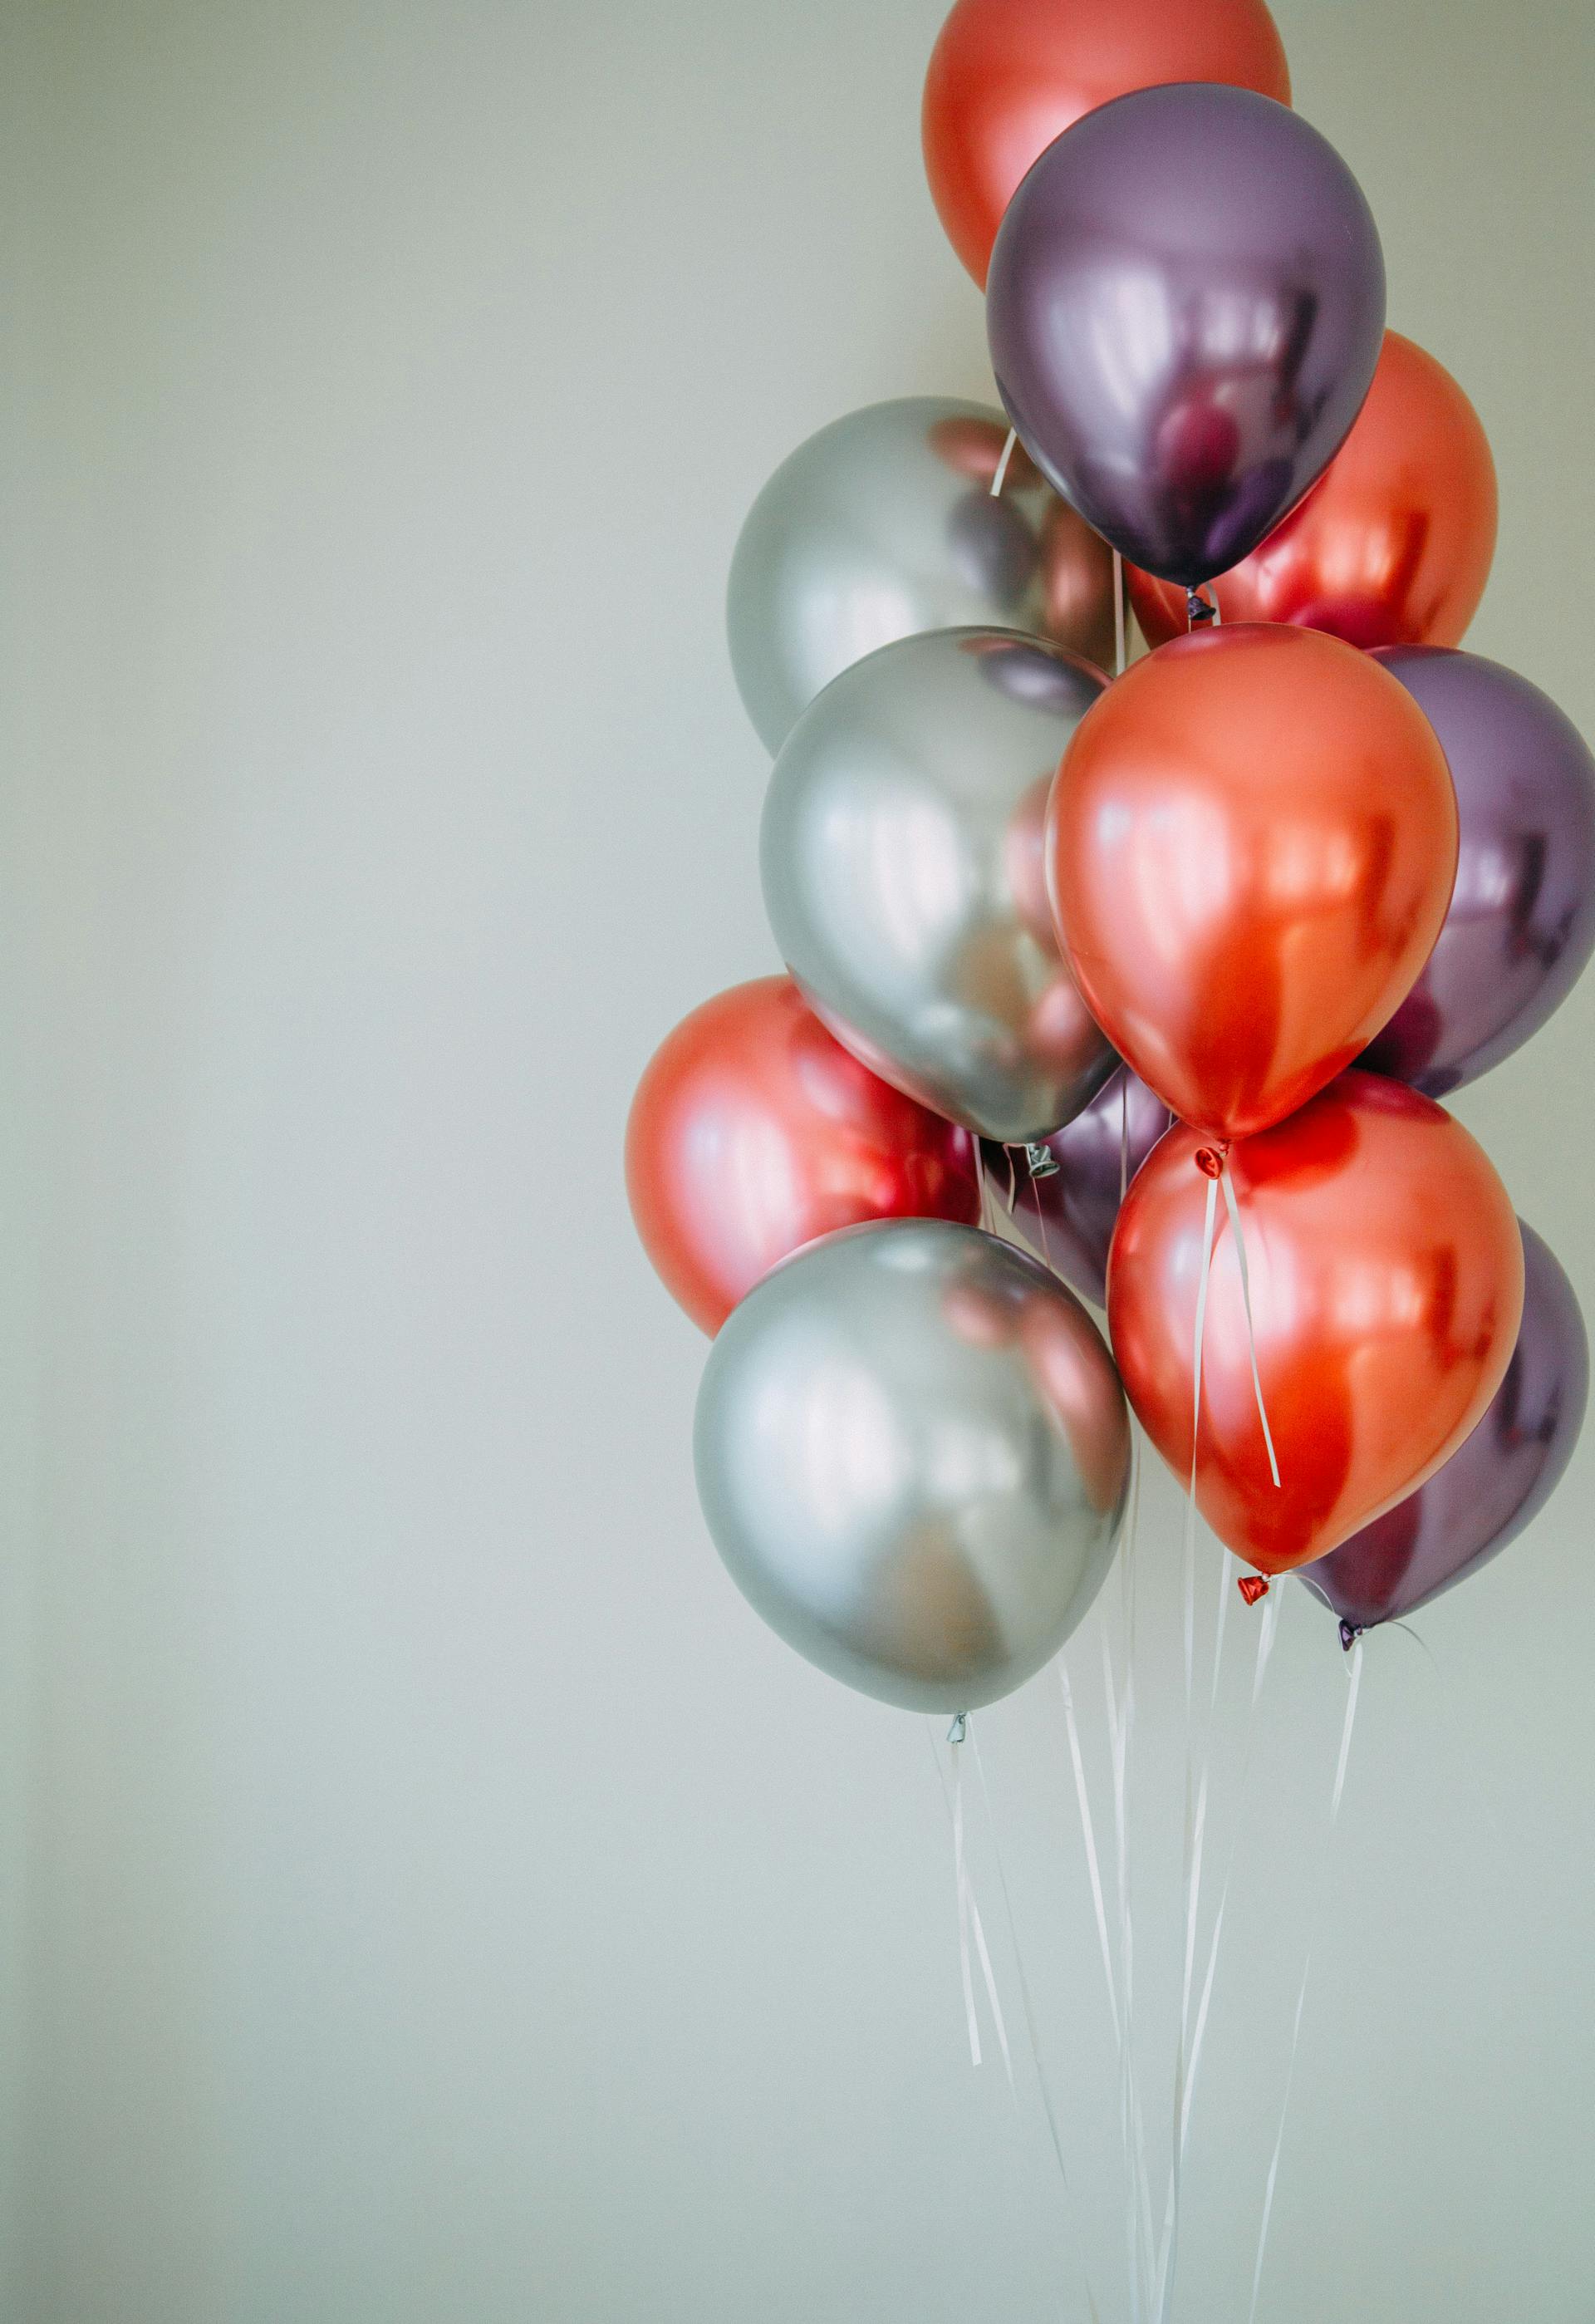 Ballons brillants flottants | Source : Pexels